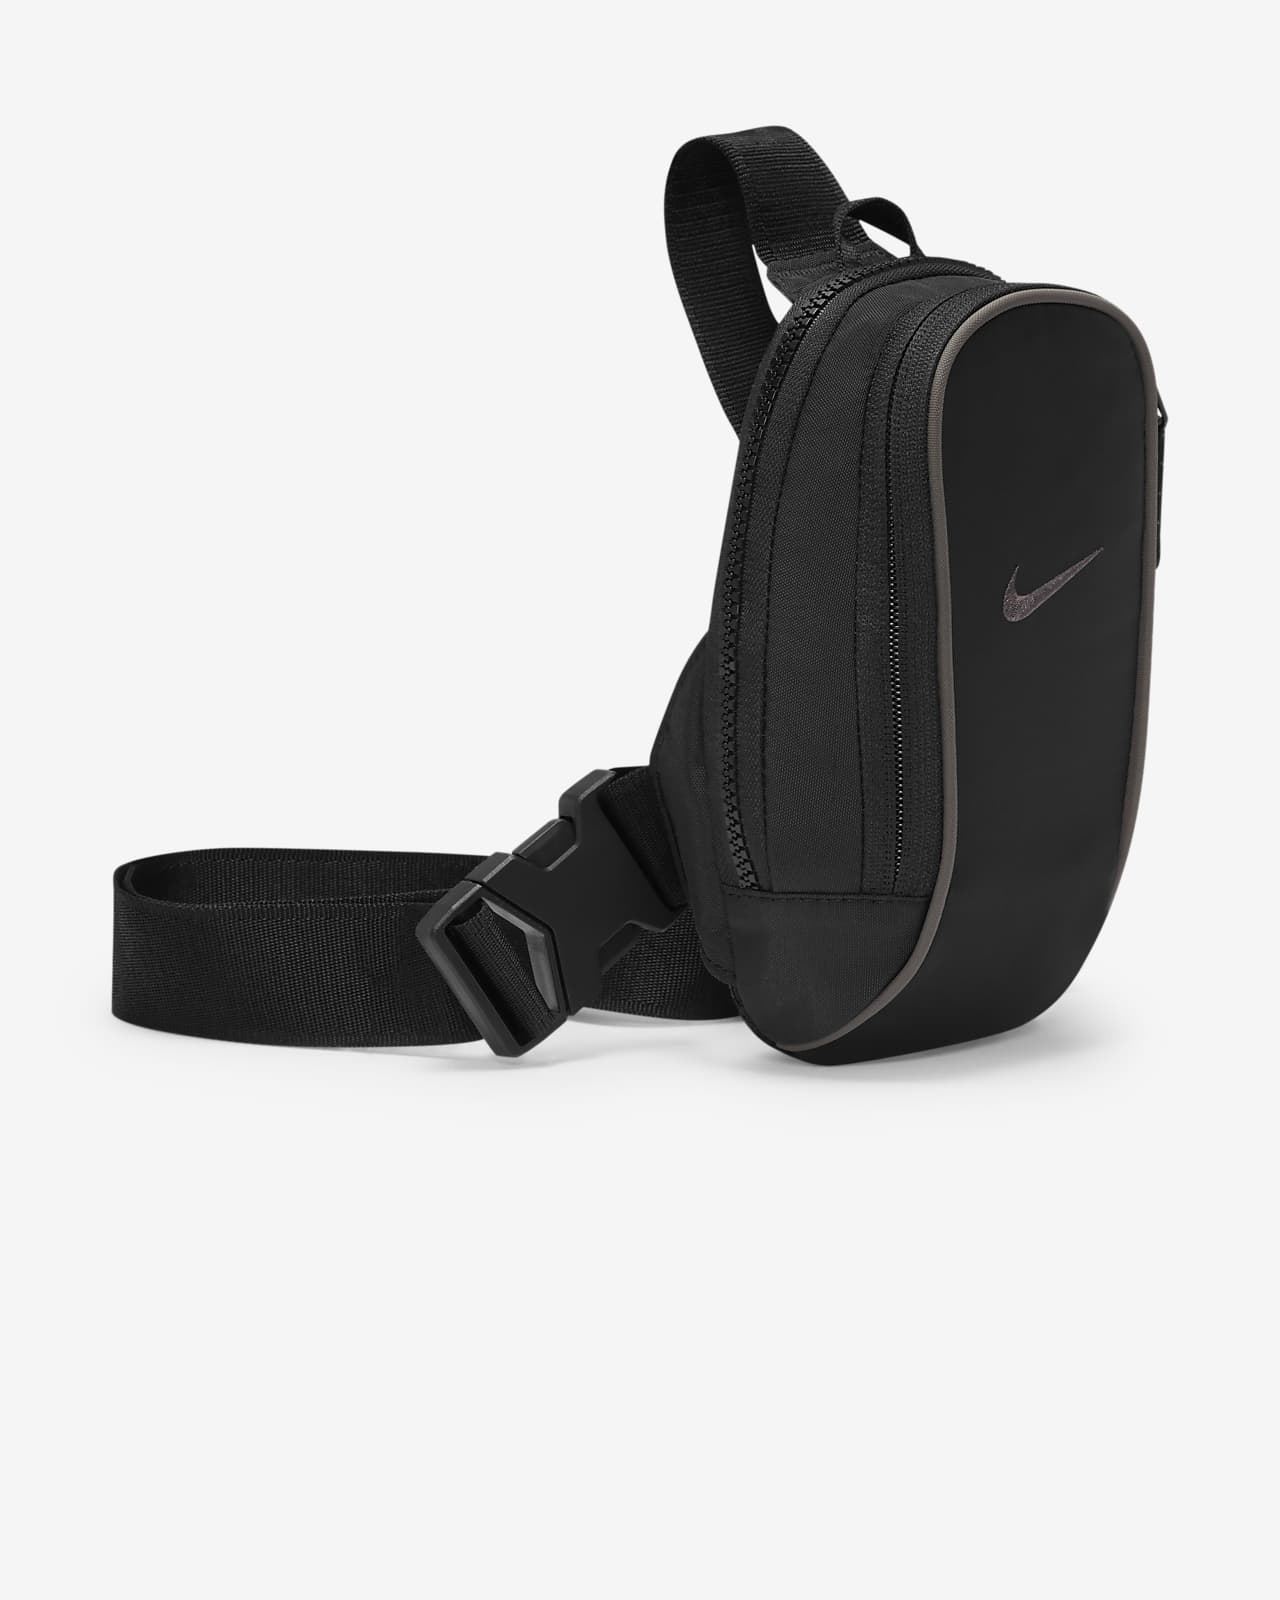 Sac à bandoulière Nike Sportswear Essentials - Nike - Marques - Lifestyle